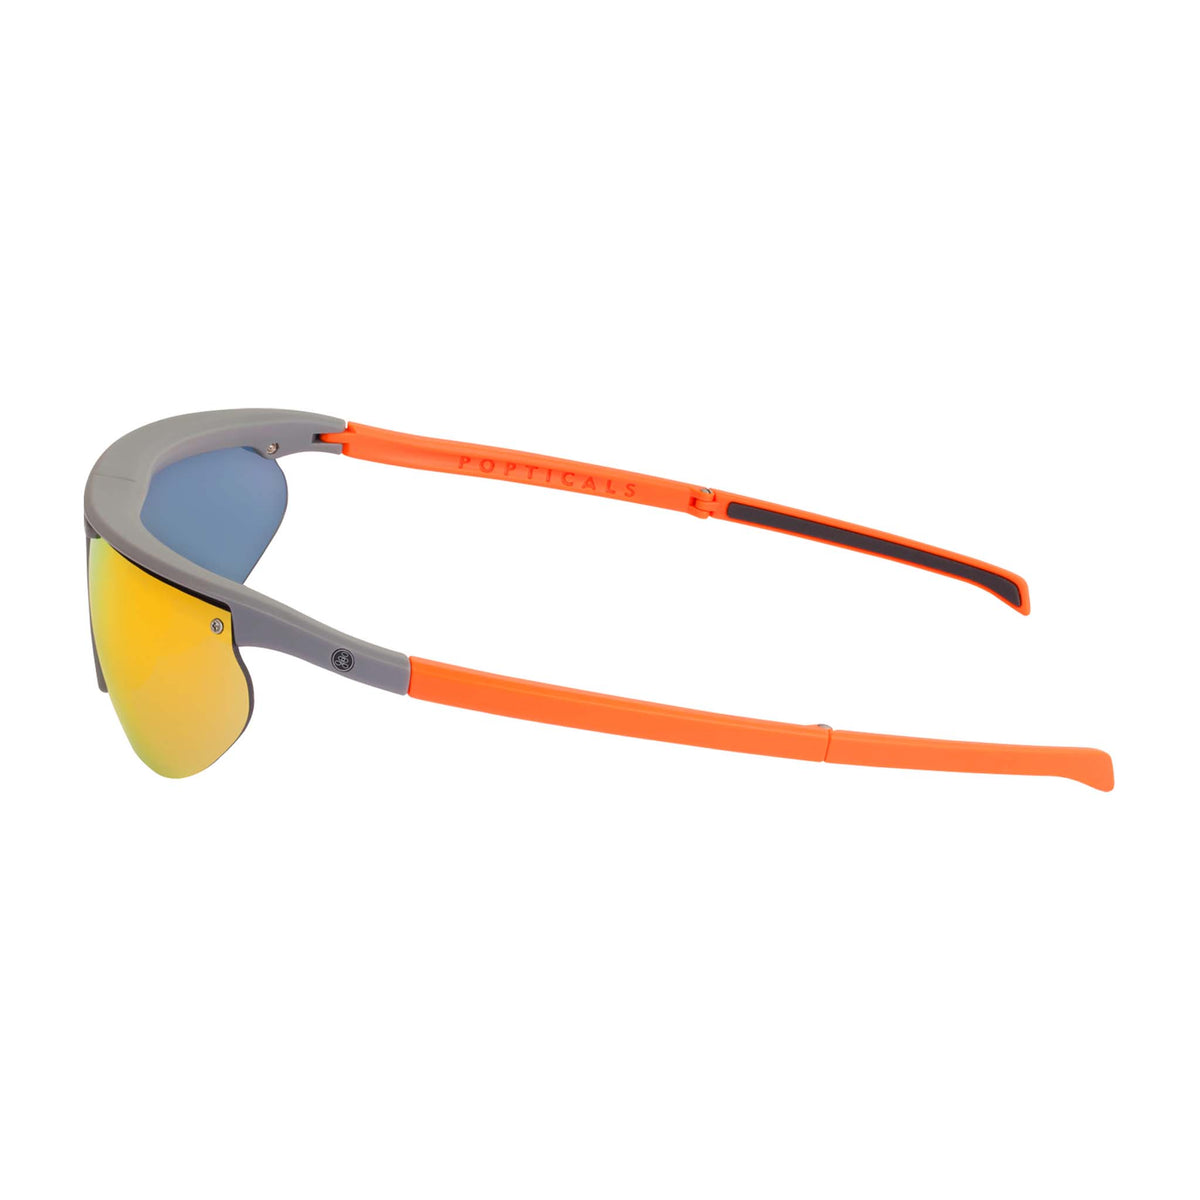 Popticals, Premium Compact Sunglasses, PopTrail, 010081-OMON, Polarized Sunglasses, Matte Gray/Orange Frame, Gray Lenses w/Orange Mirror Finish, Side View